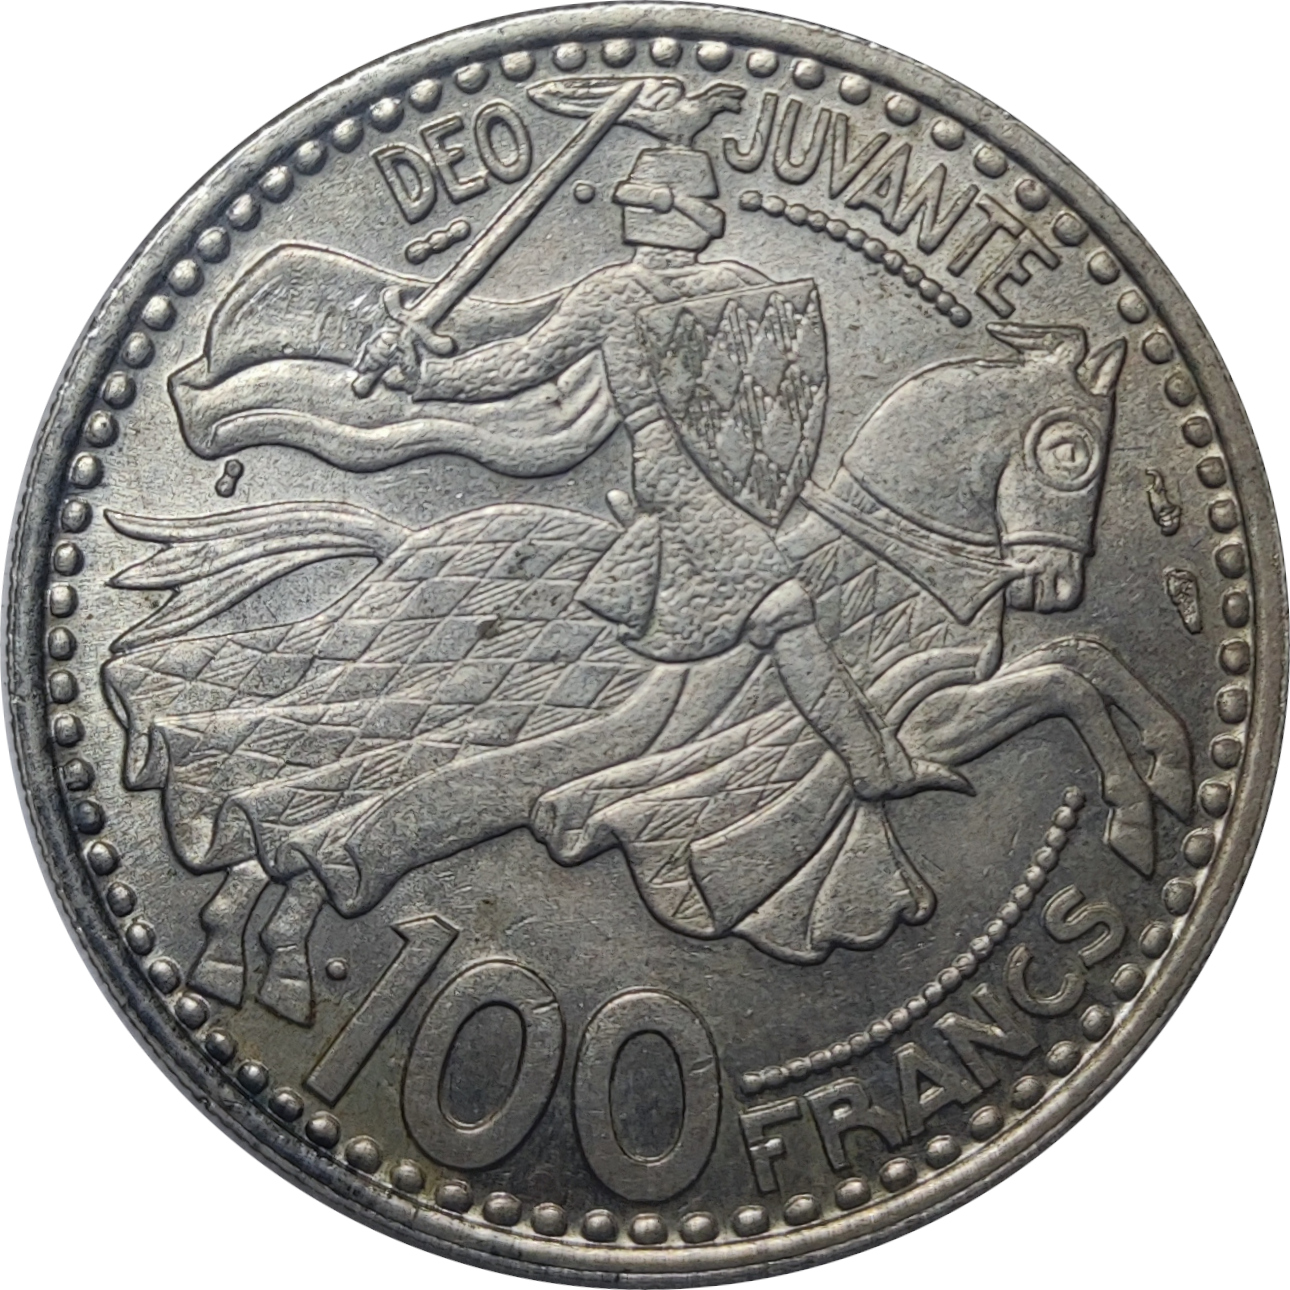 100 francs - Rainier III - Chevalier